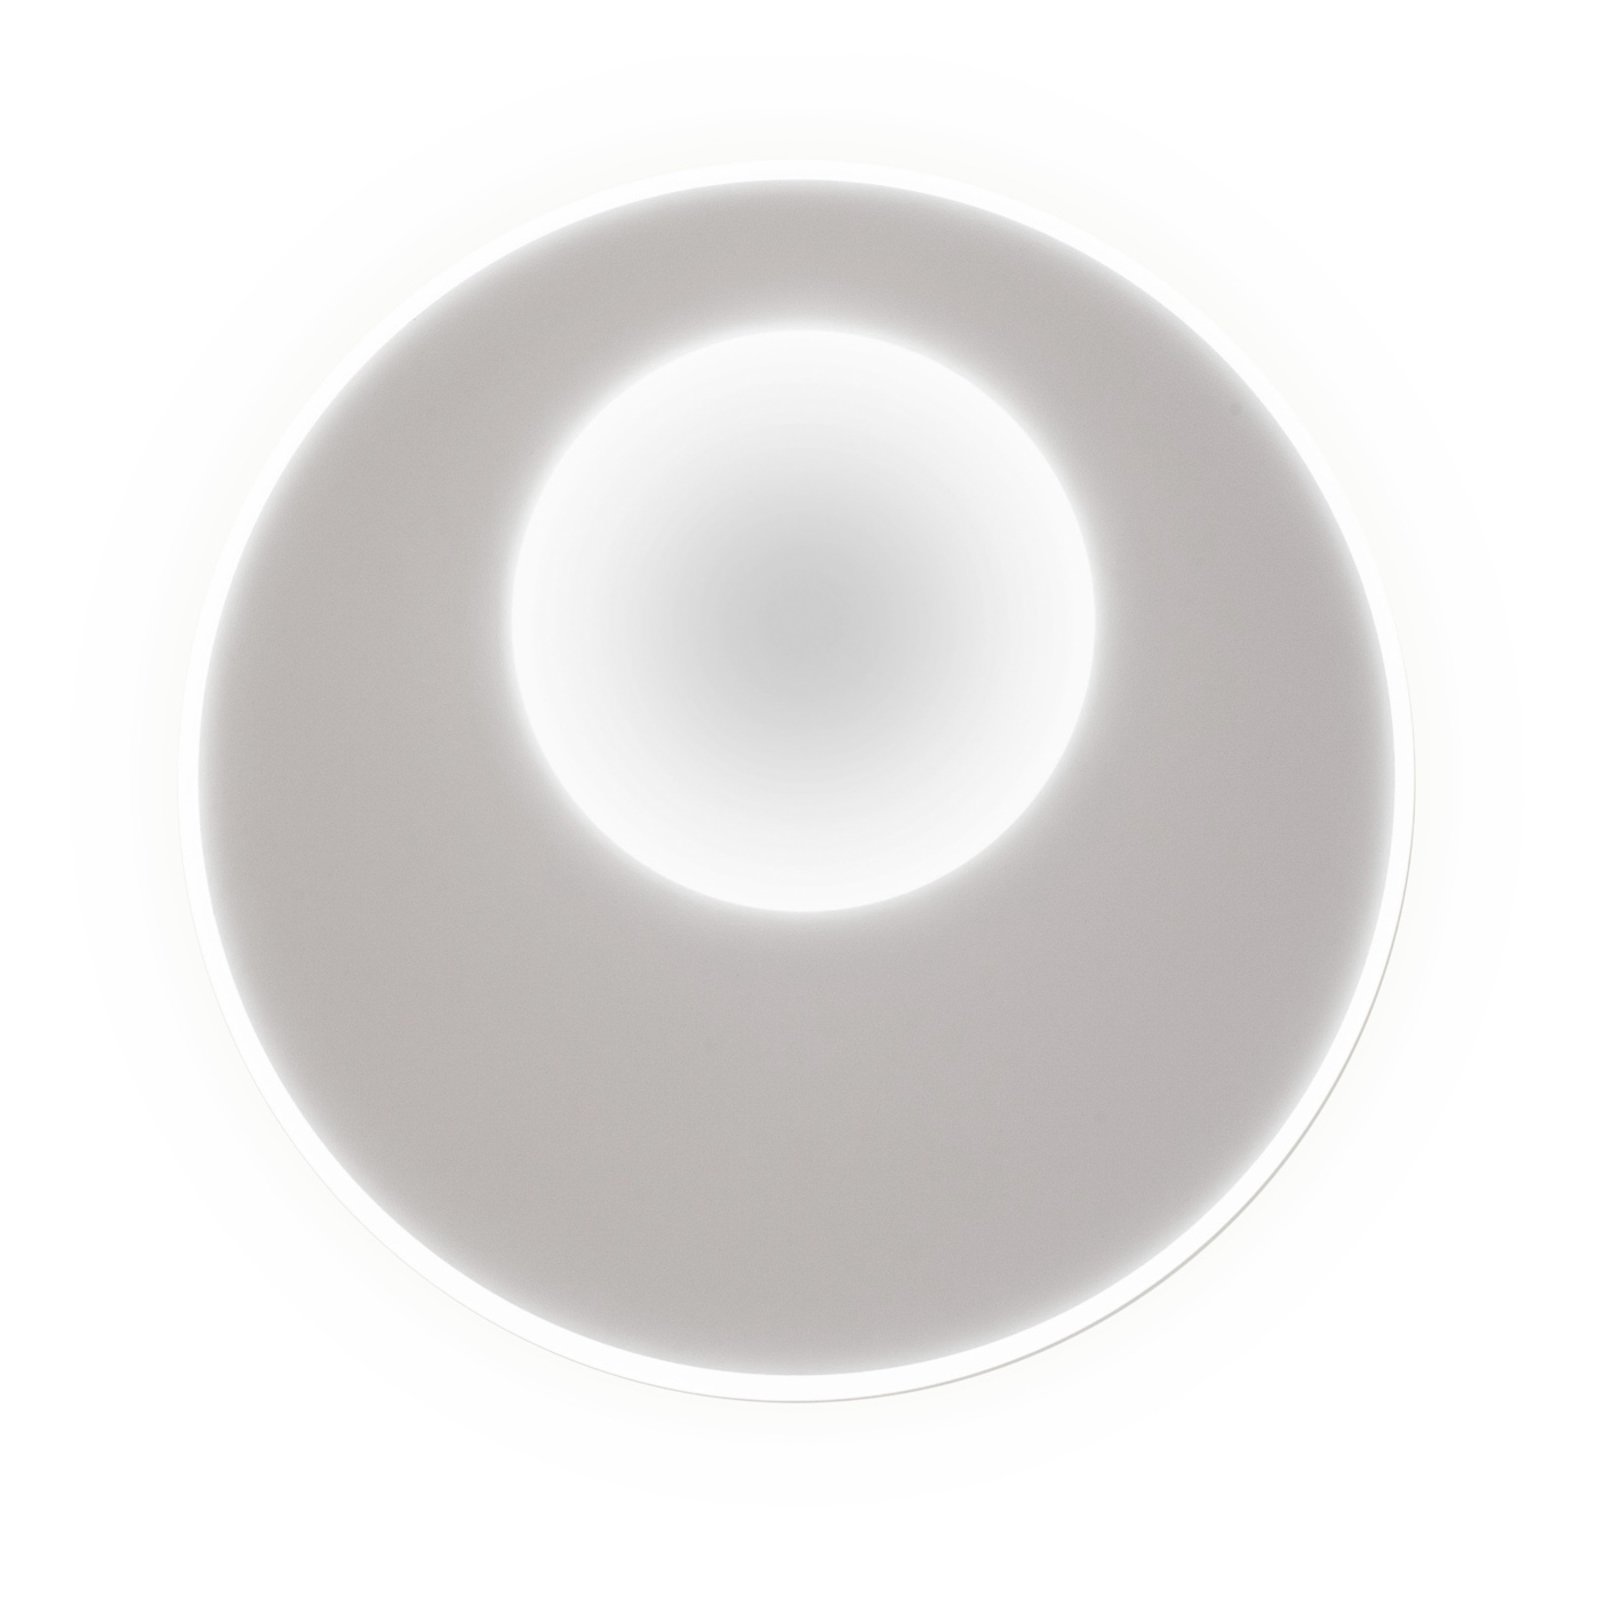 LED plafondlamp Krater wit afstembaar wit dimbaar